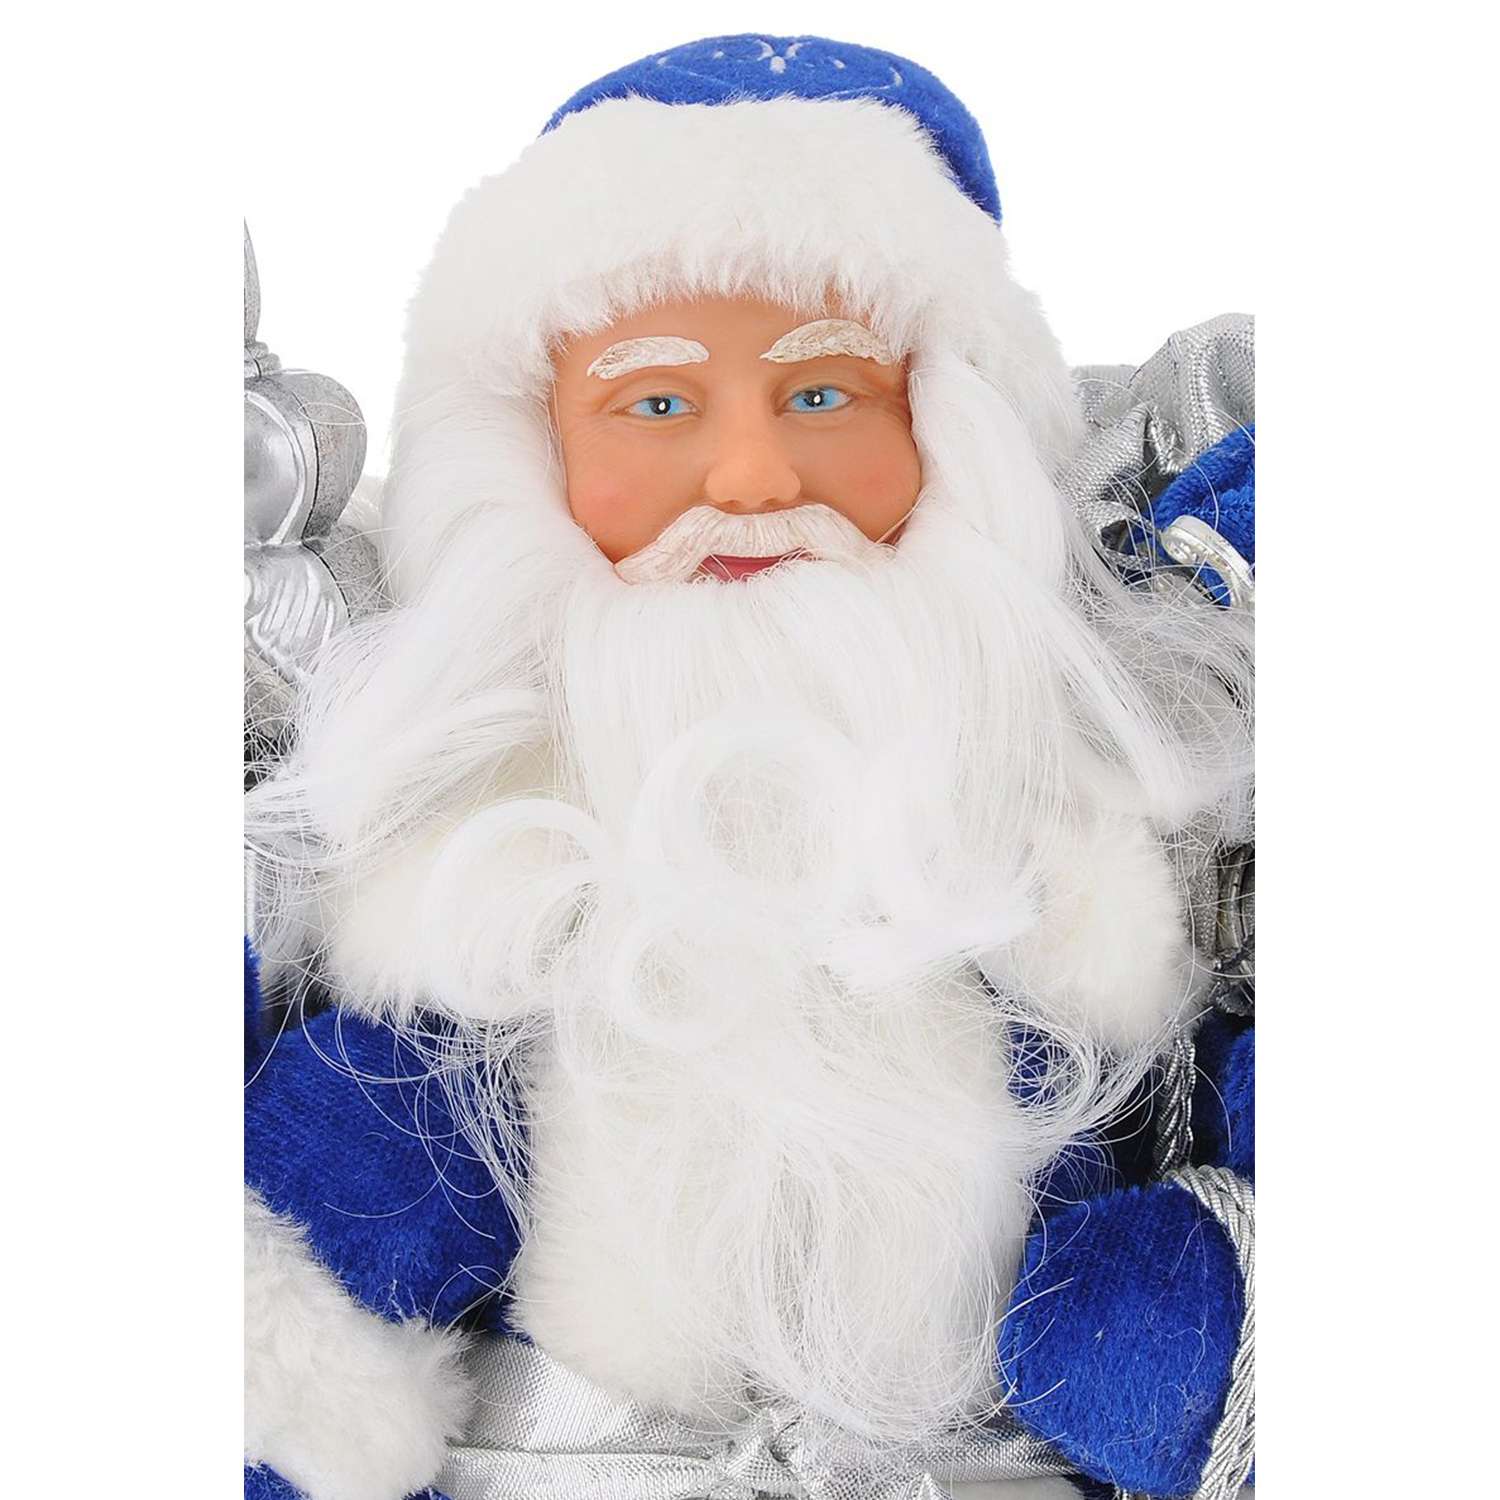 Фигурка новогодняя Magic Time Дед Мороз в синем костюме - фото 3